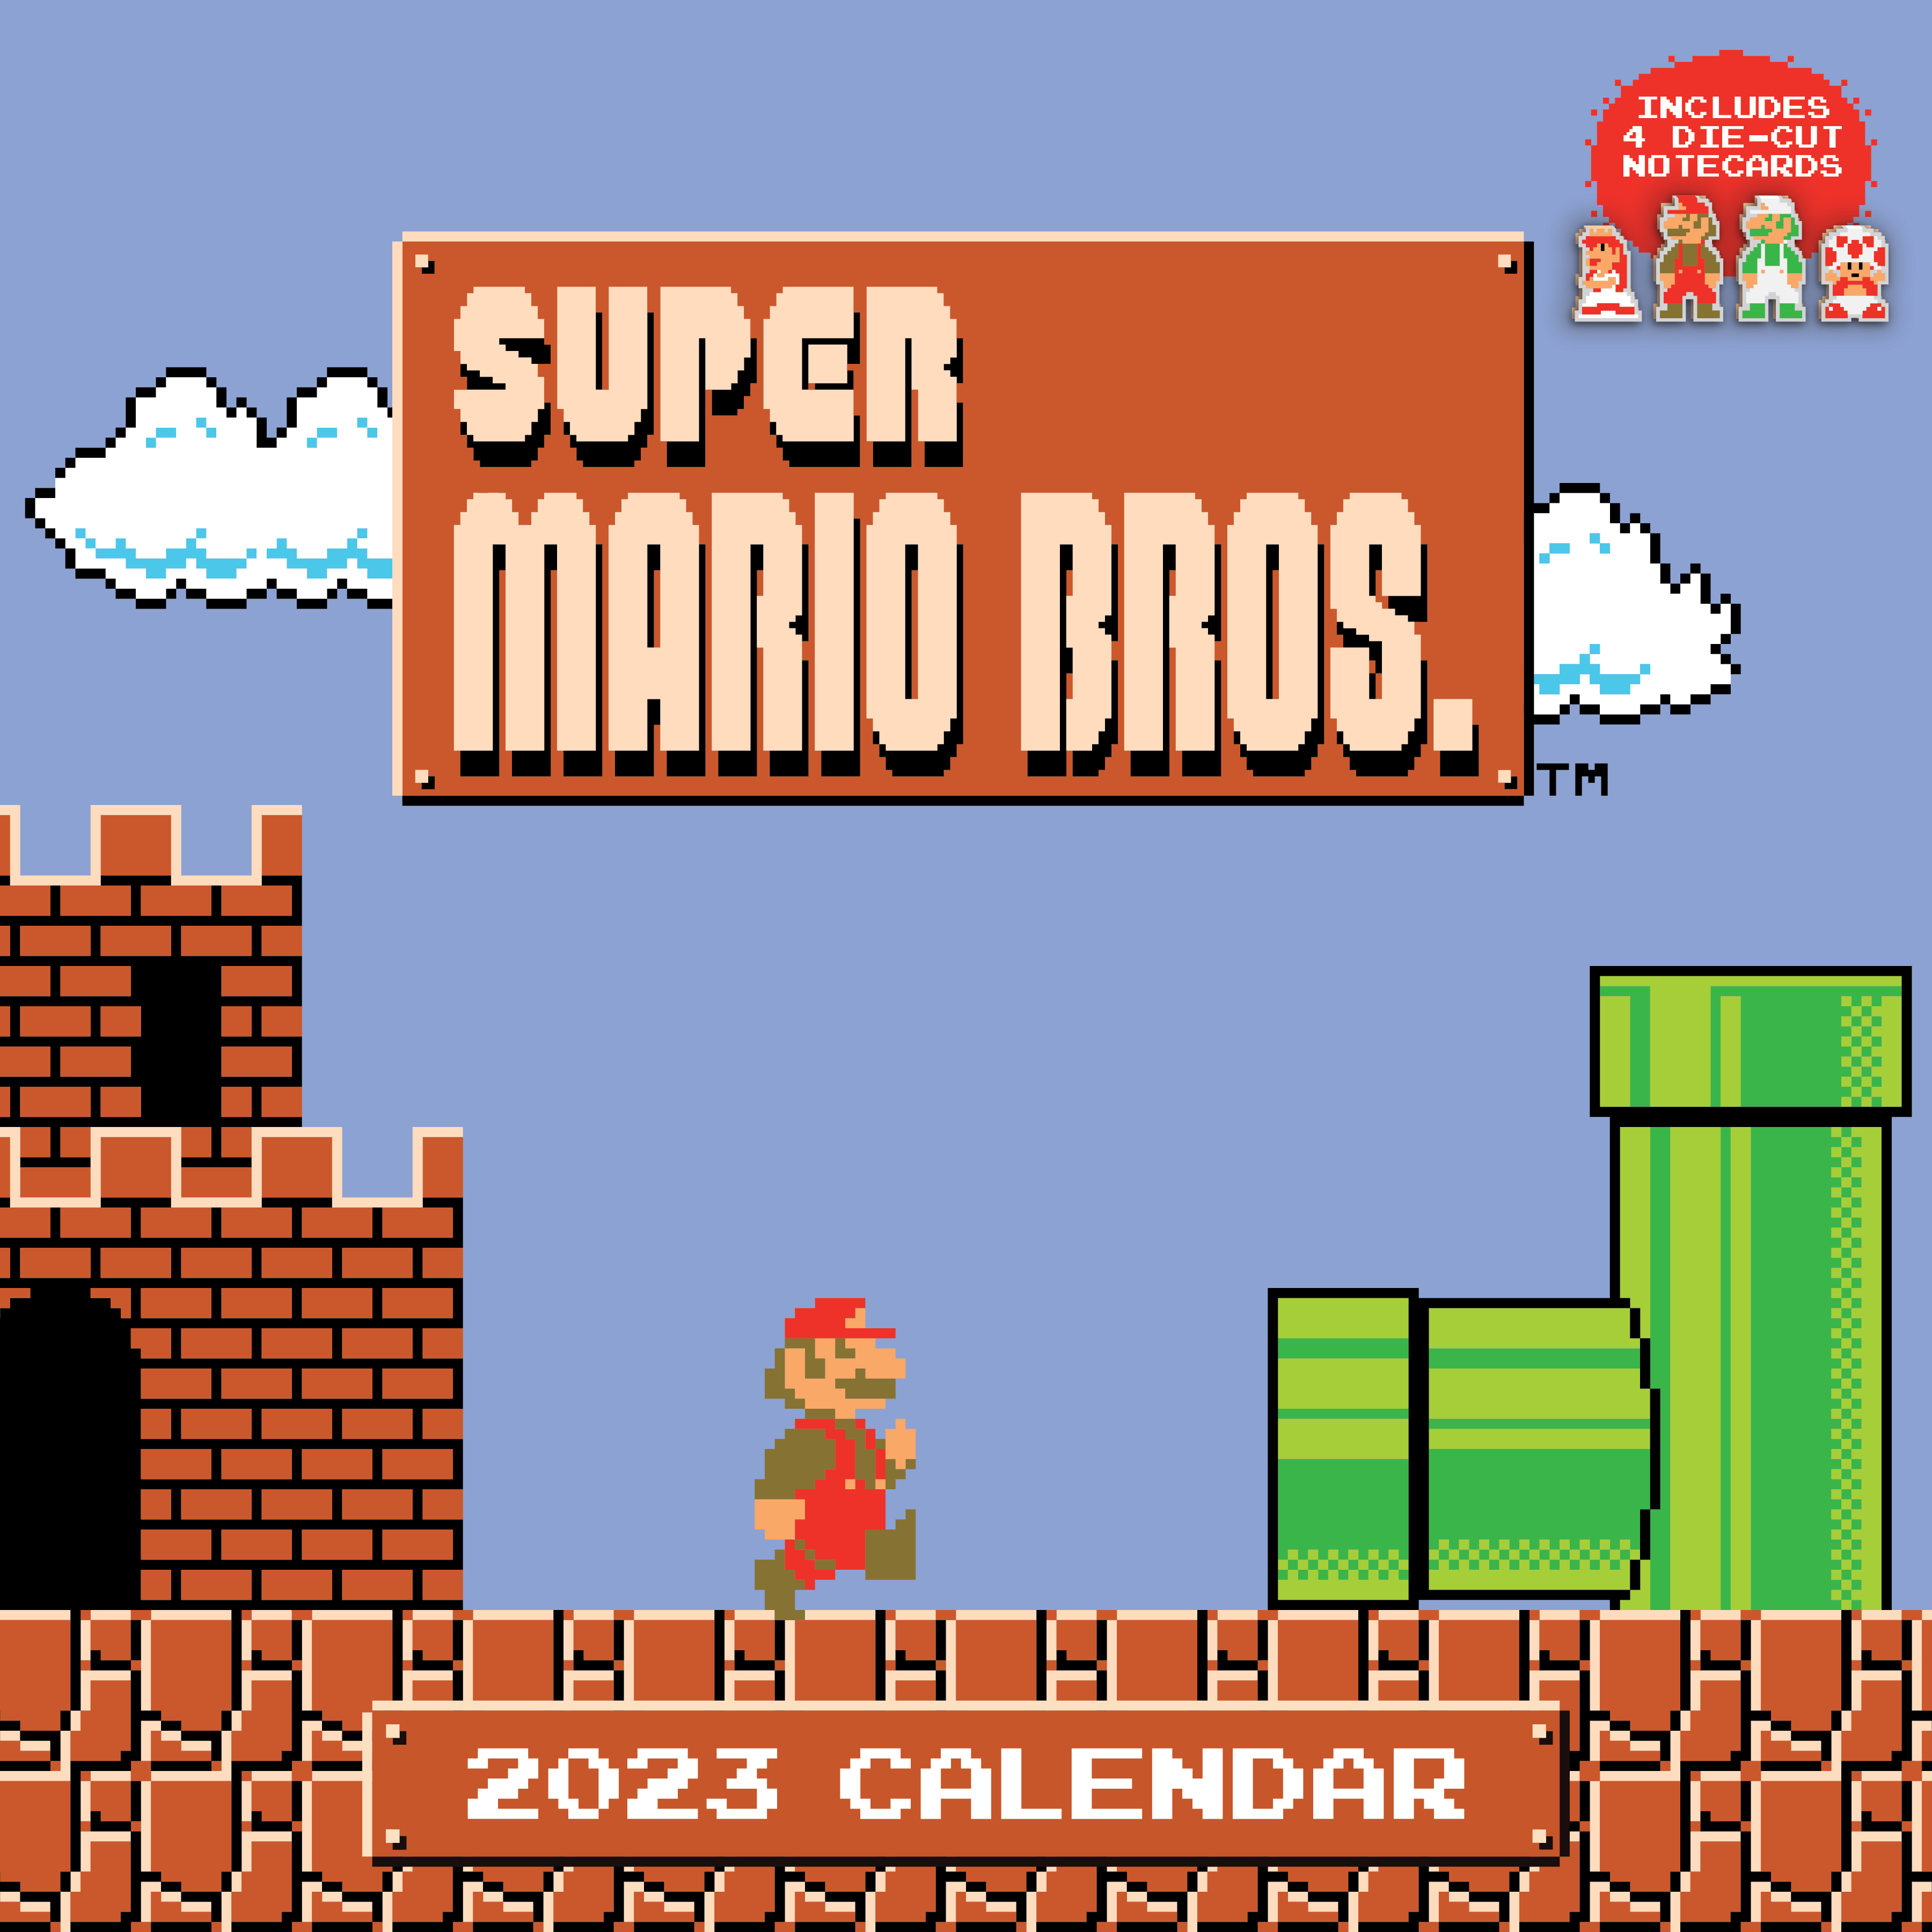 Super Mario Bros. 8 Bit Retro 2023 Wall Calendar With Bonus Diecut Notecards Summary & Video. Official Publisher Page. Simon & Schuster